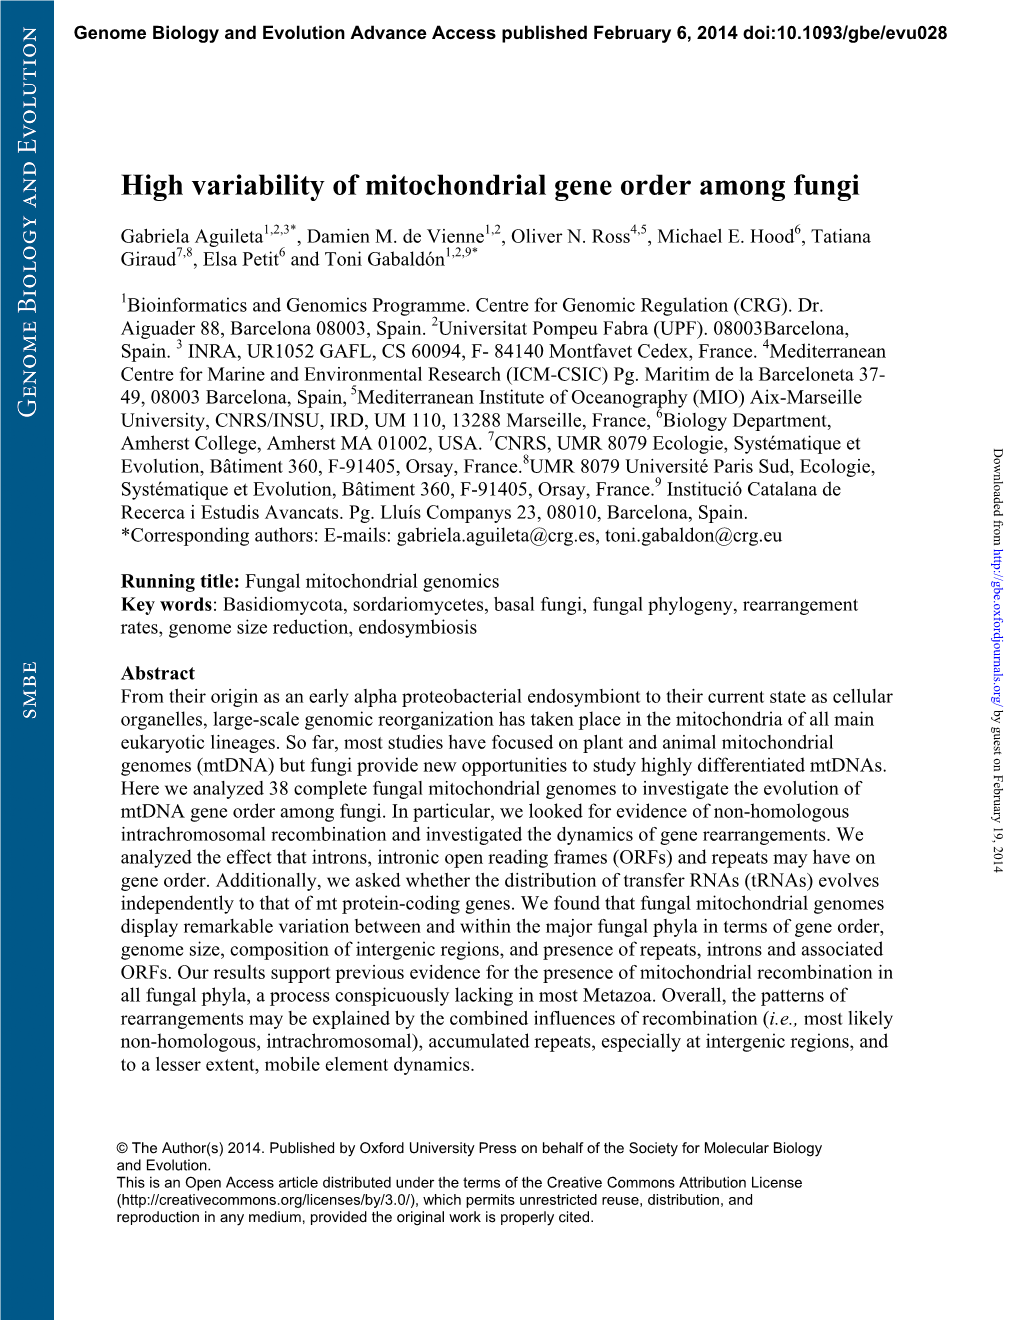 High Variability of Mitochondrial Gene Order Among Fungi